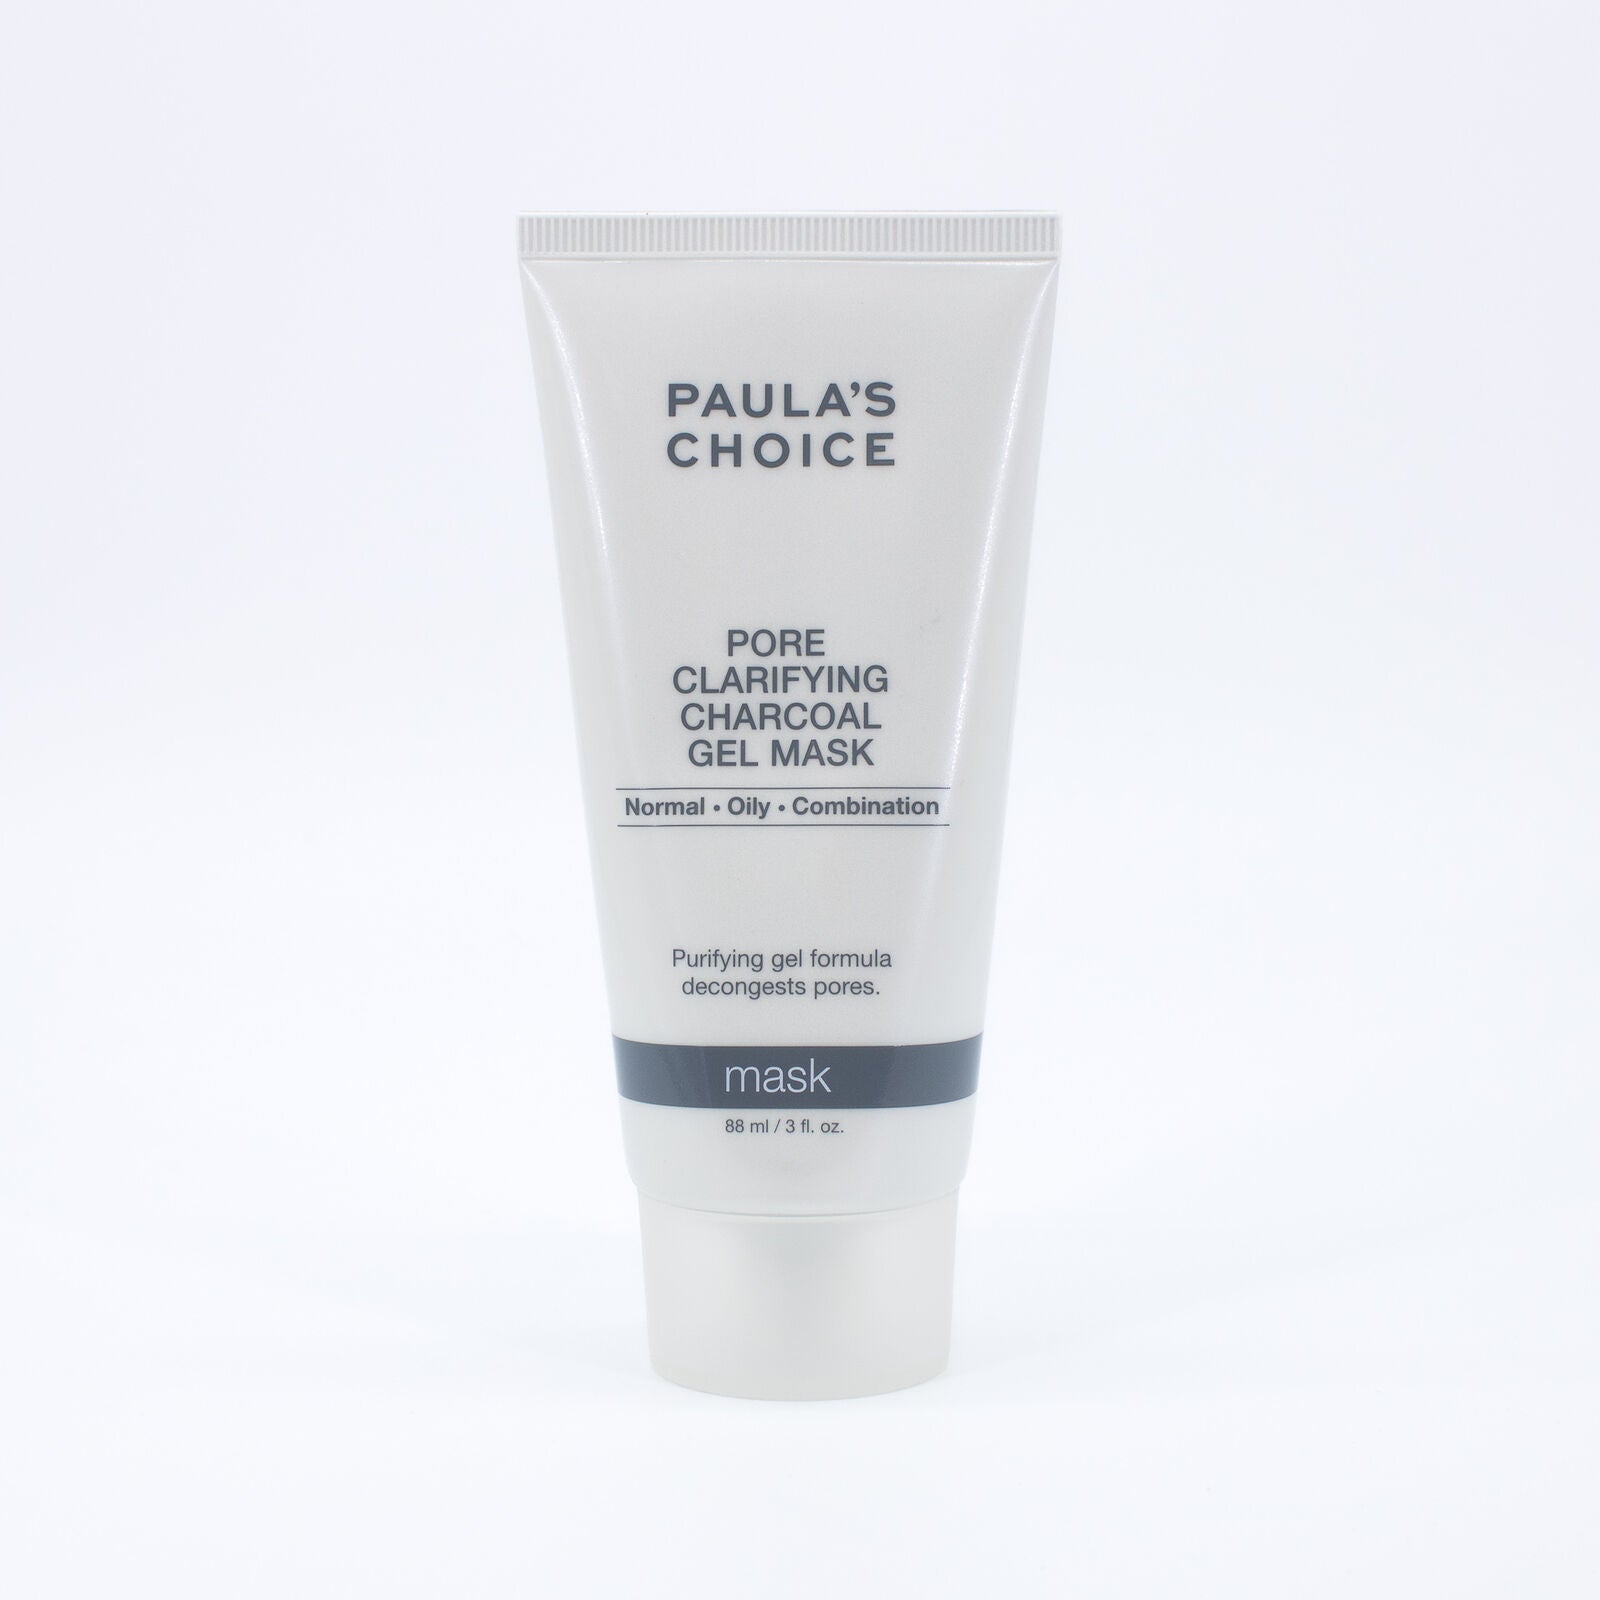 paulas-choice-pore-clarifying-charcol-gel-mask-88ml-full-size